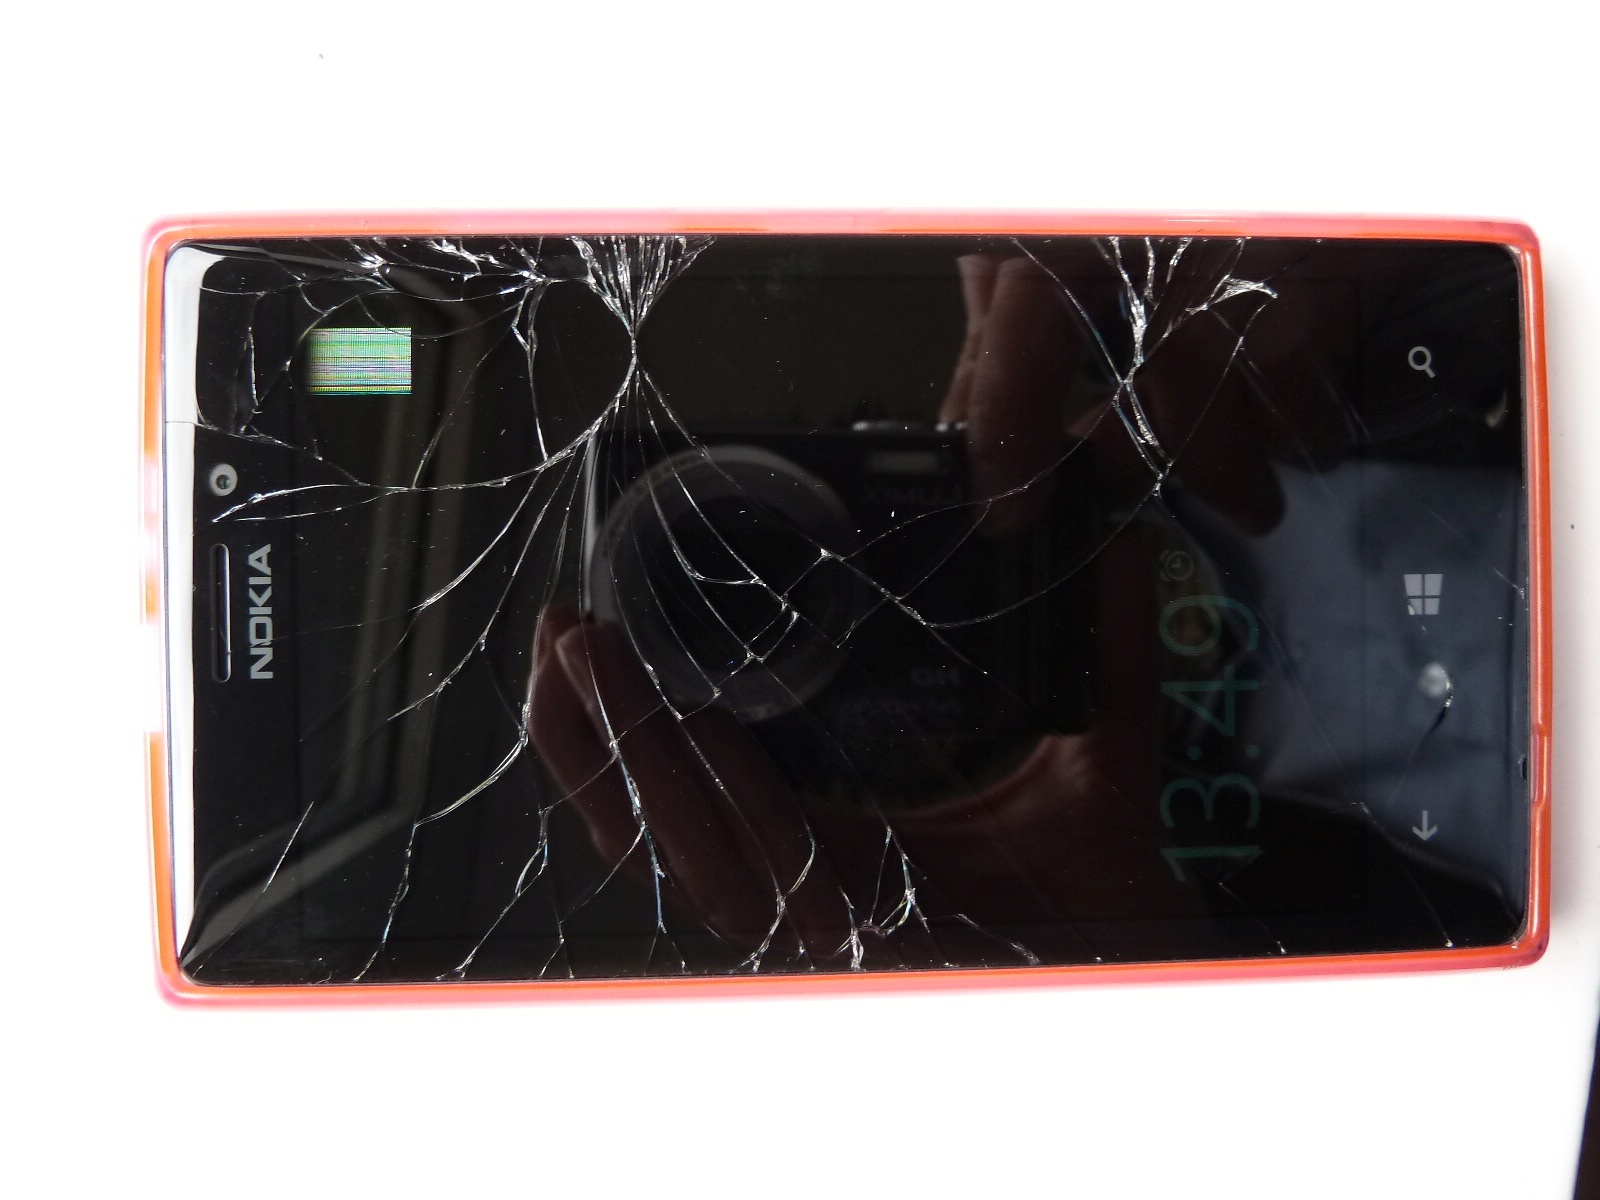 Lumia 925 broken